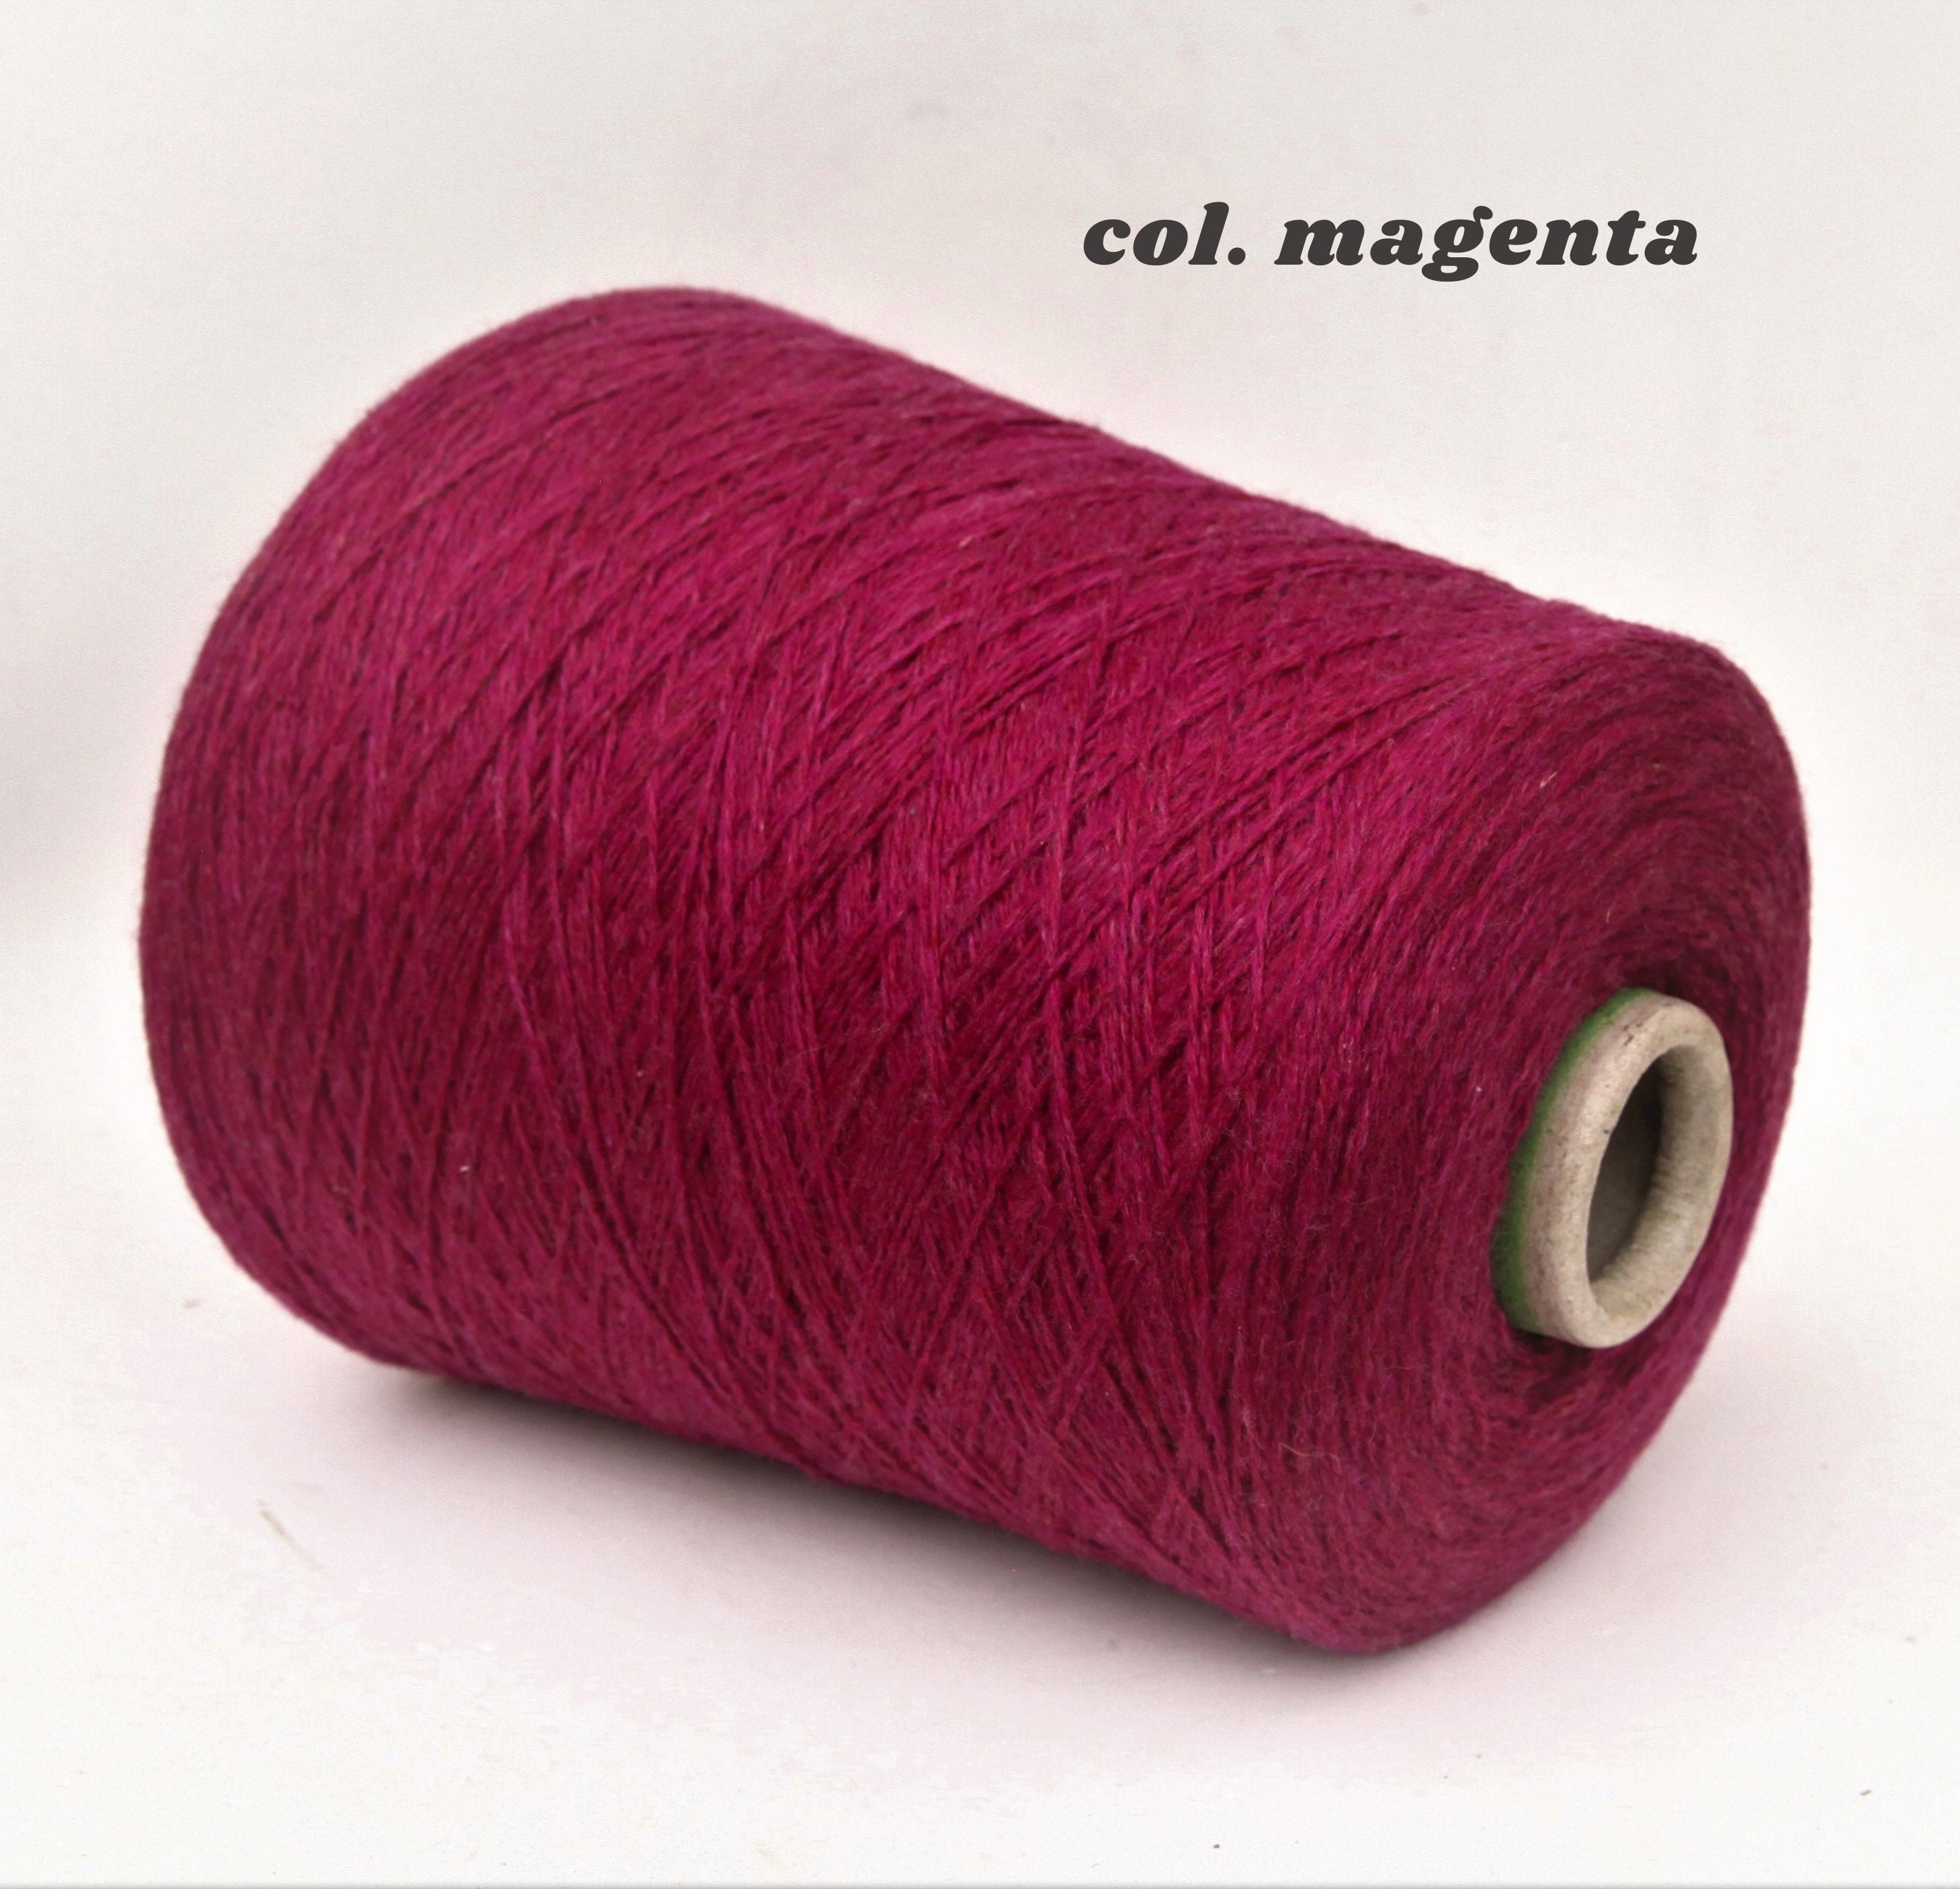 100% cashmere yarn on cone, italian yarn, sock weight yarn for